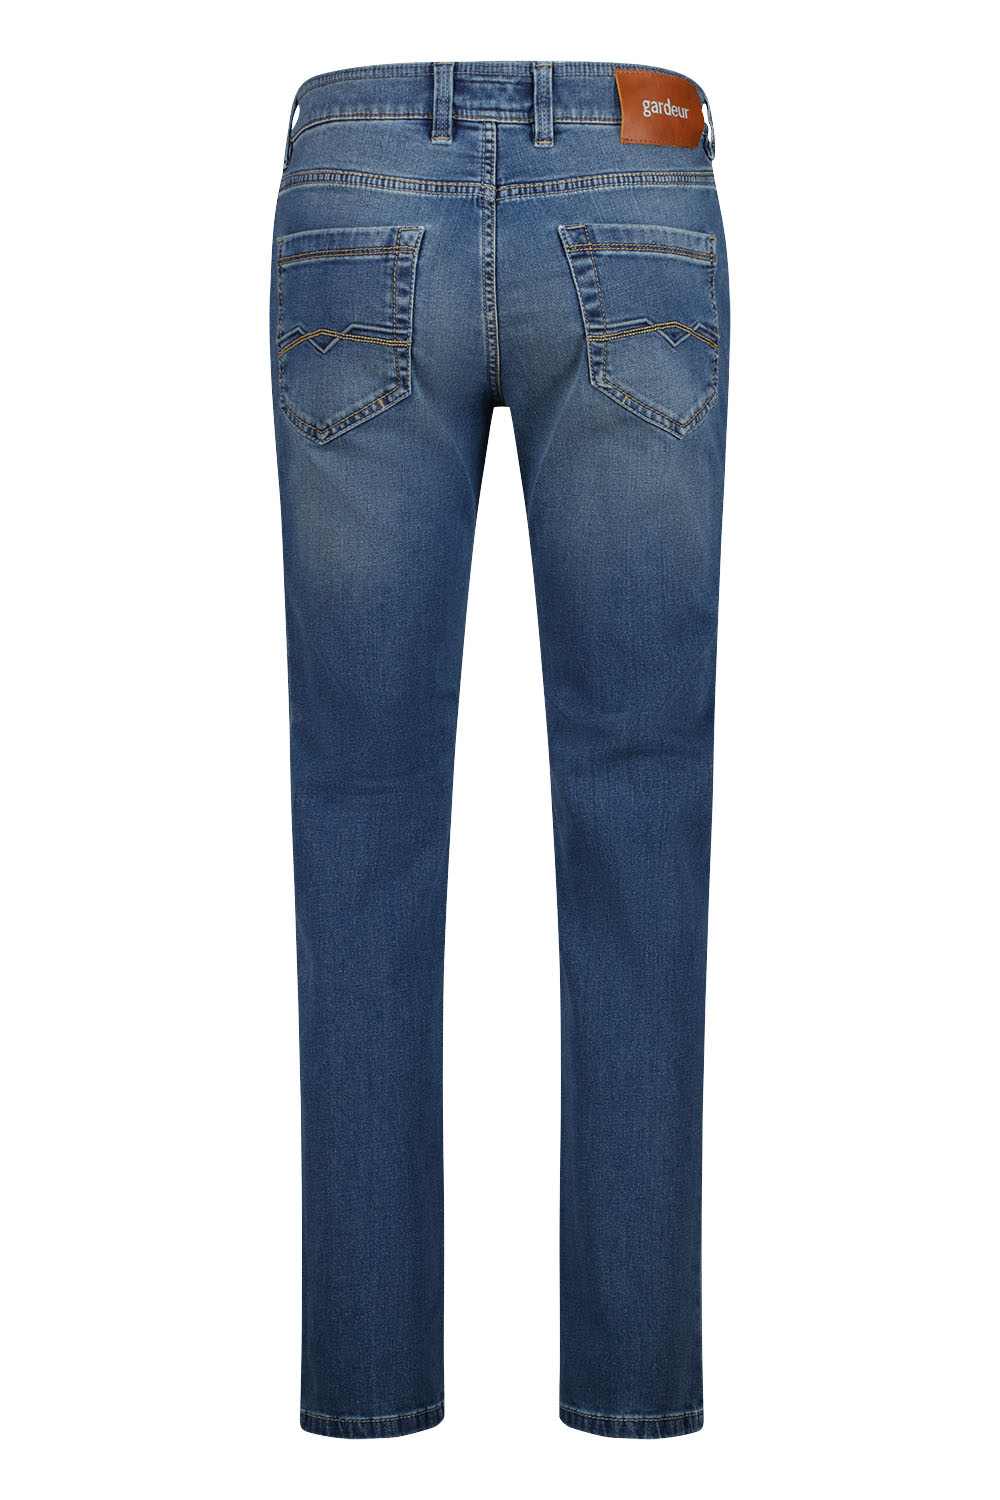 Gardeur - Batu Jeans Indigo Blauw - Maat W 35 - L 32 - Modern-fit